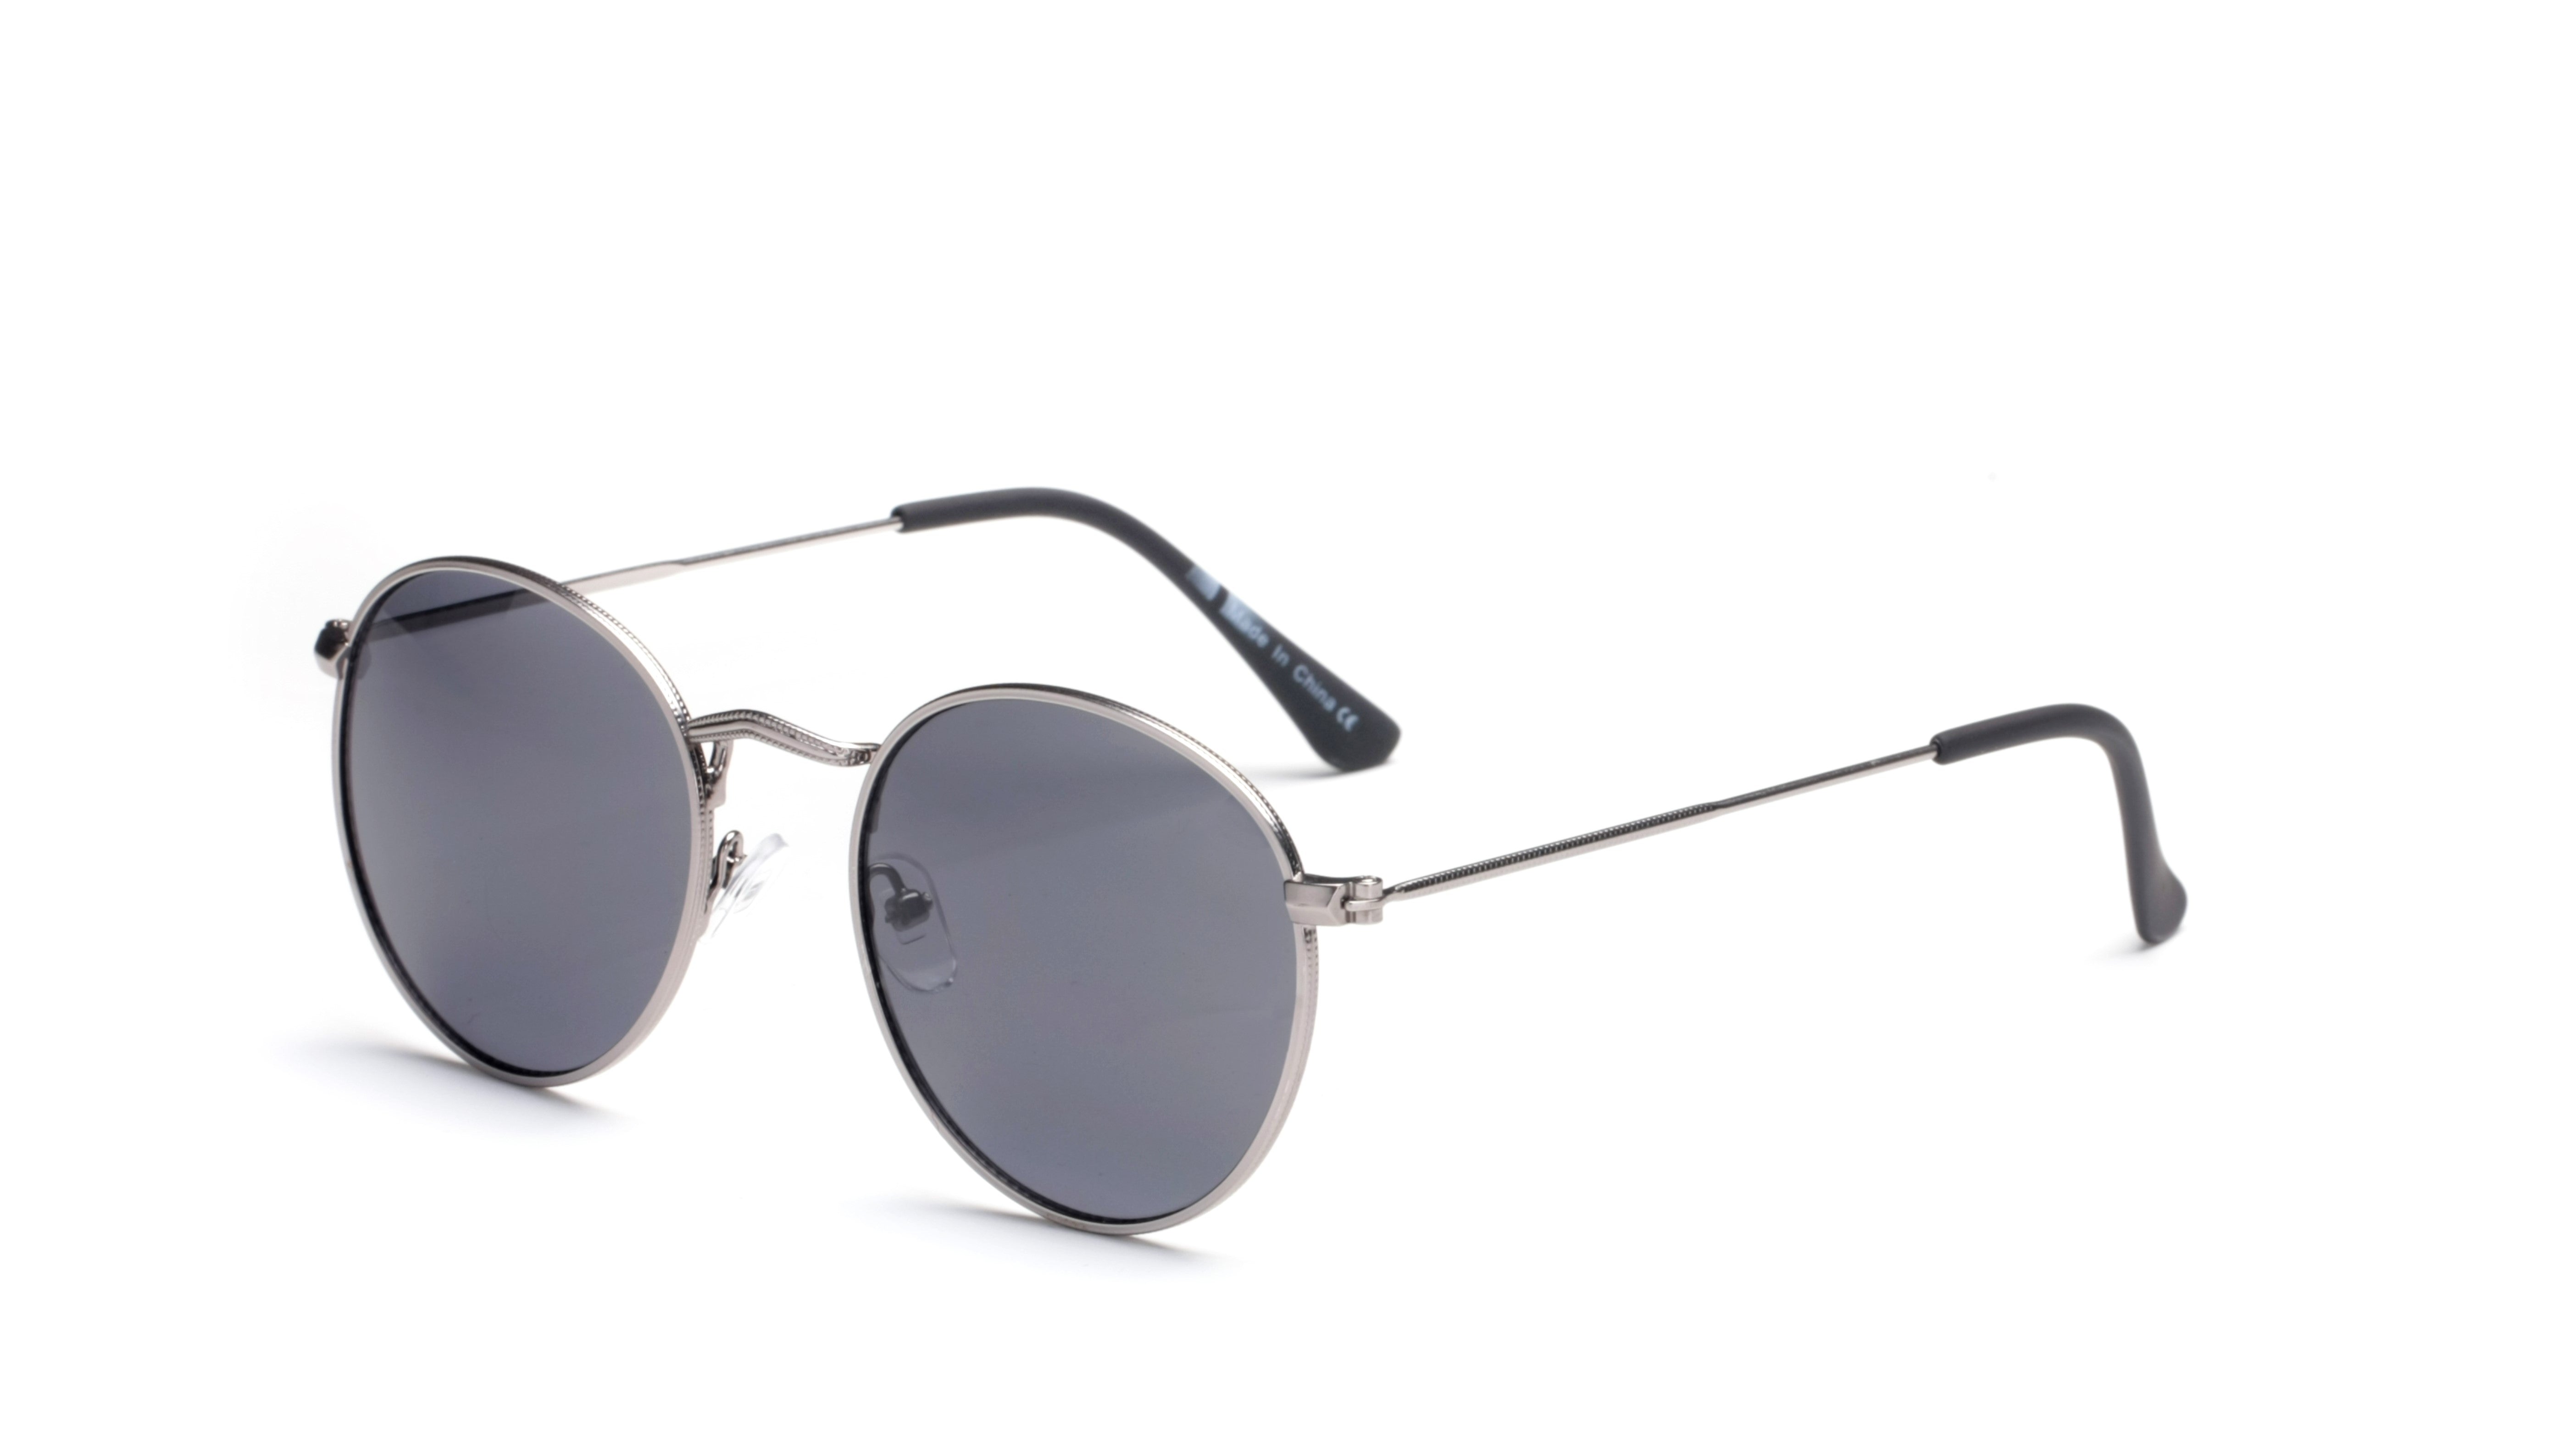 S1125 - Unisex Round Fashion Sunglasses Black